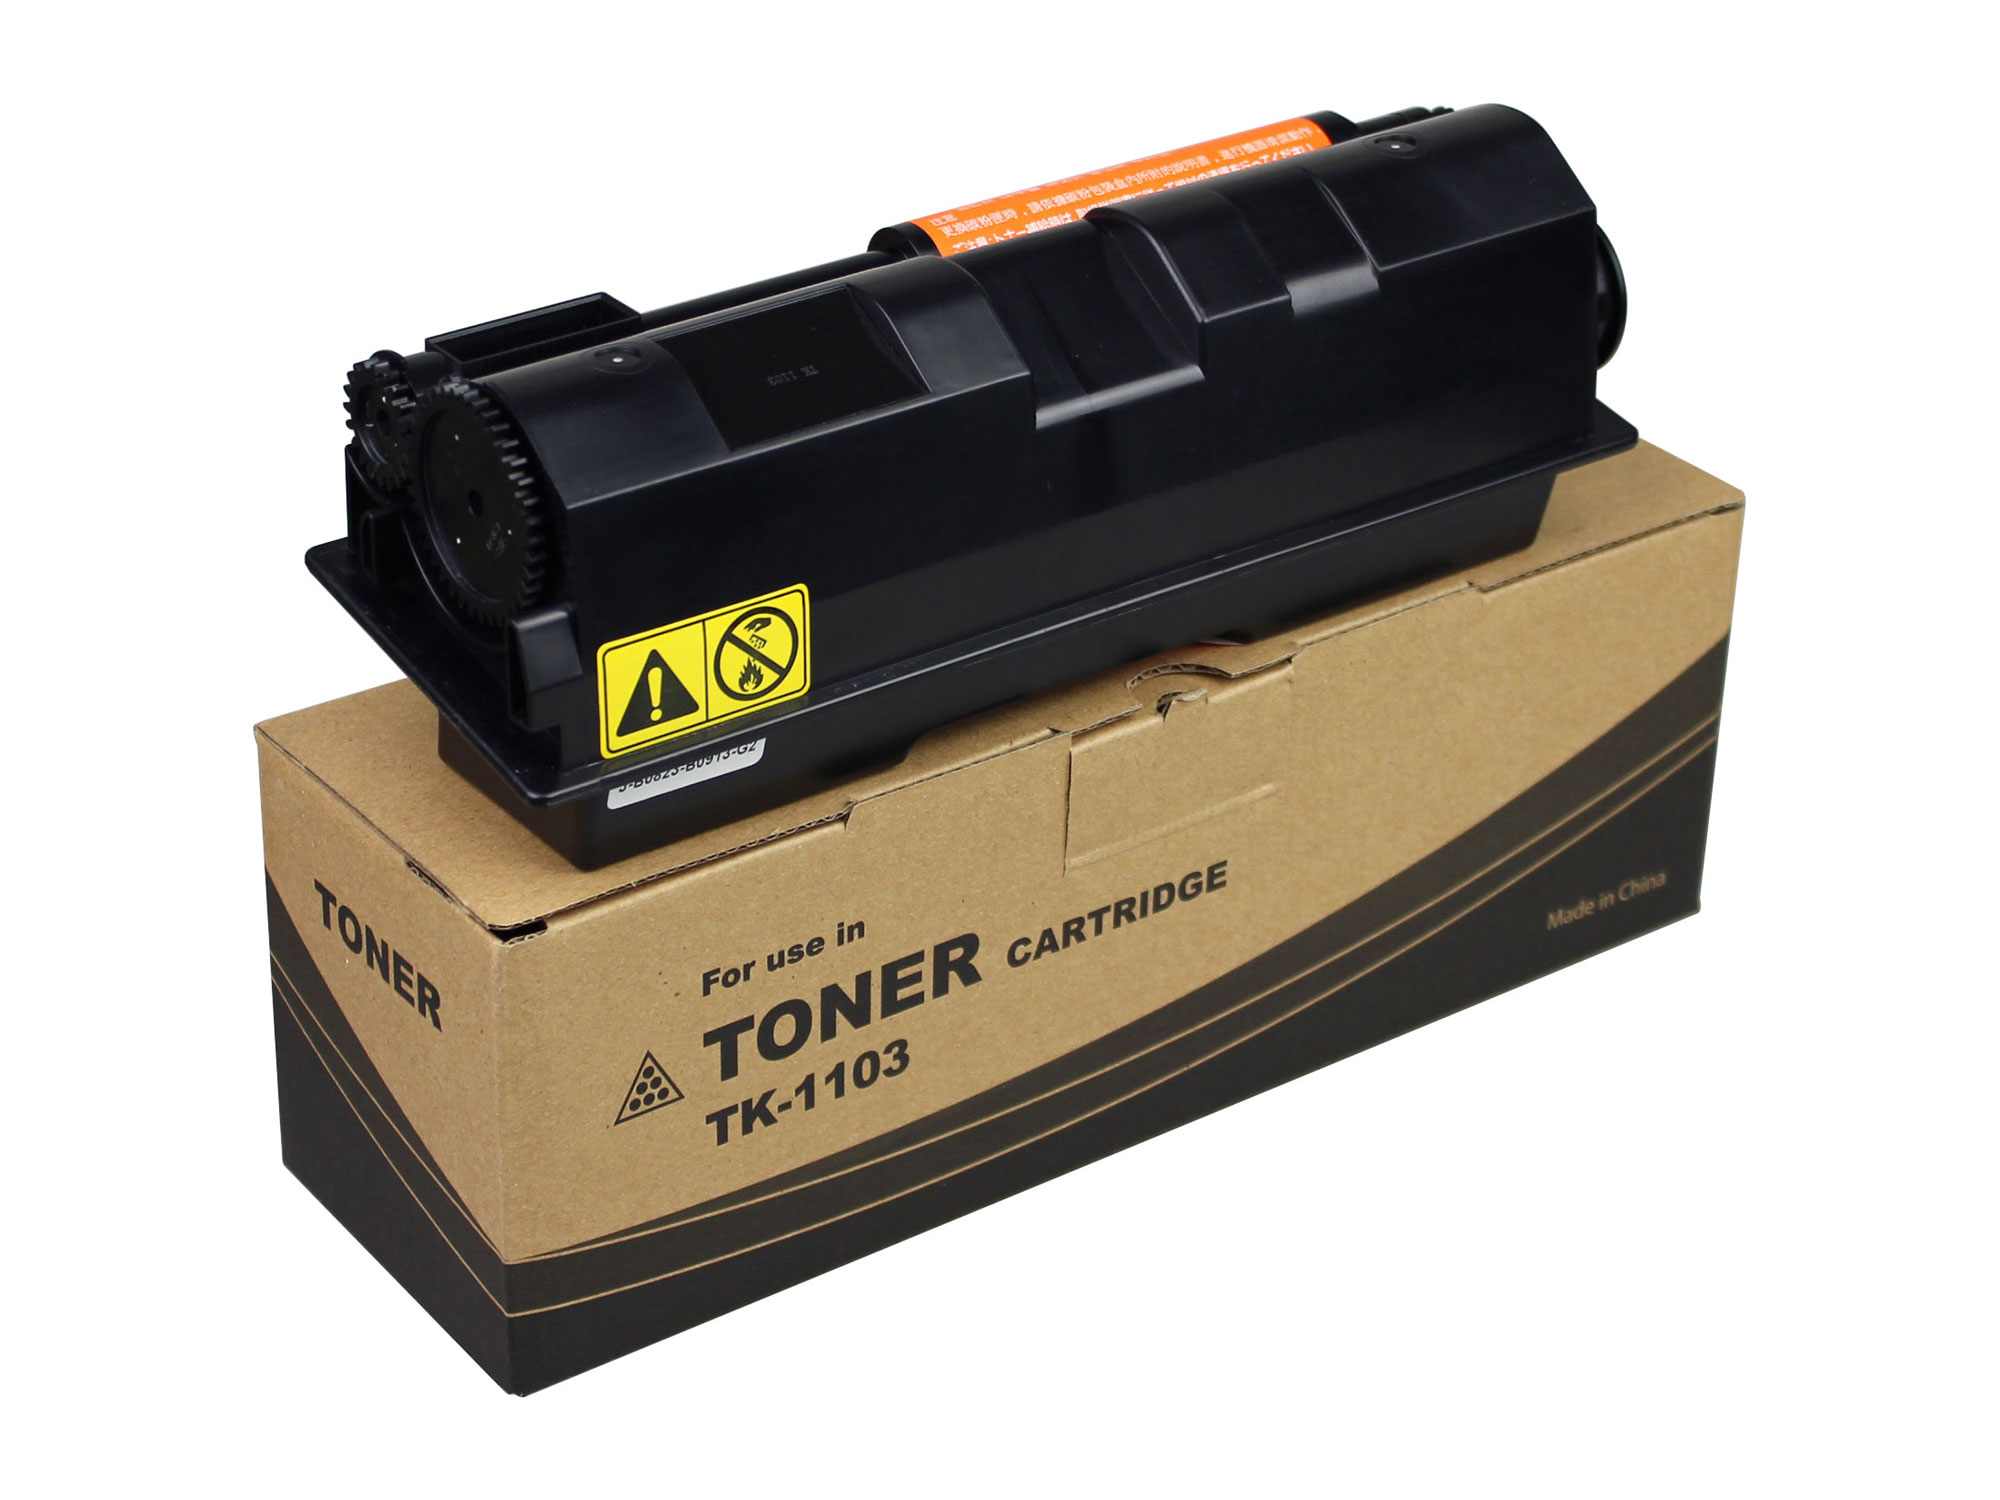 TK-1103 Toner Cartridge for Kyocera FS-1110